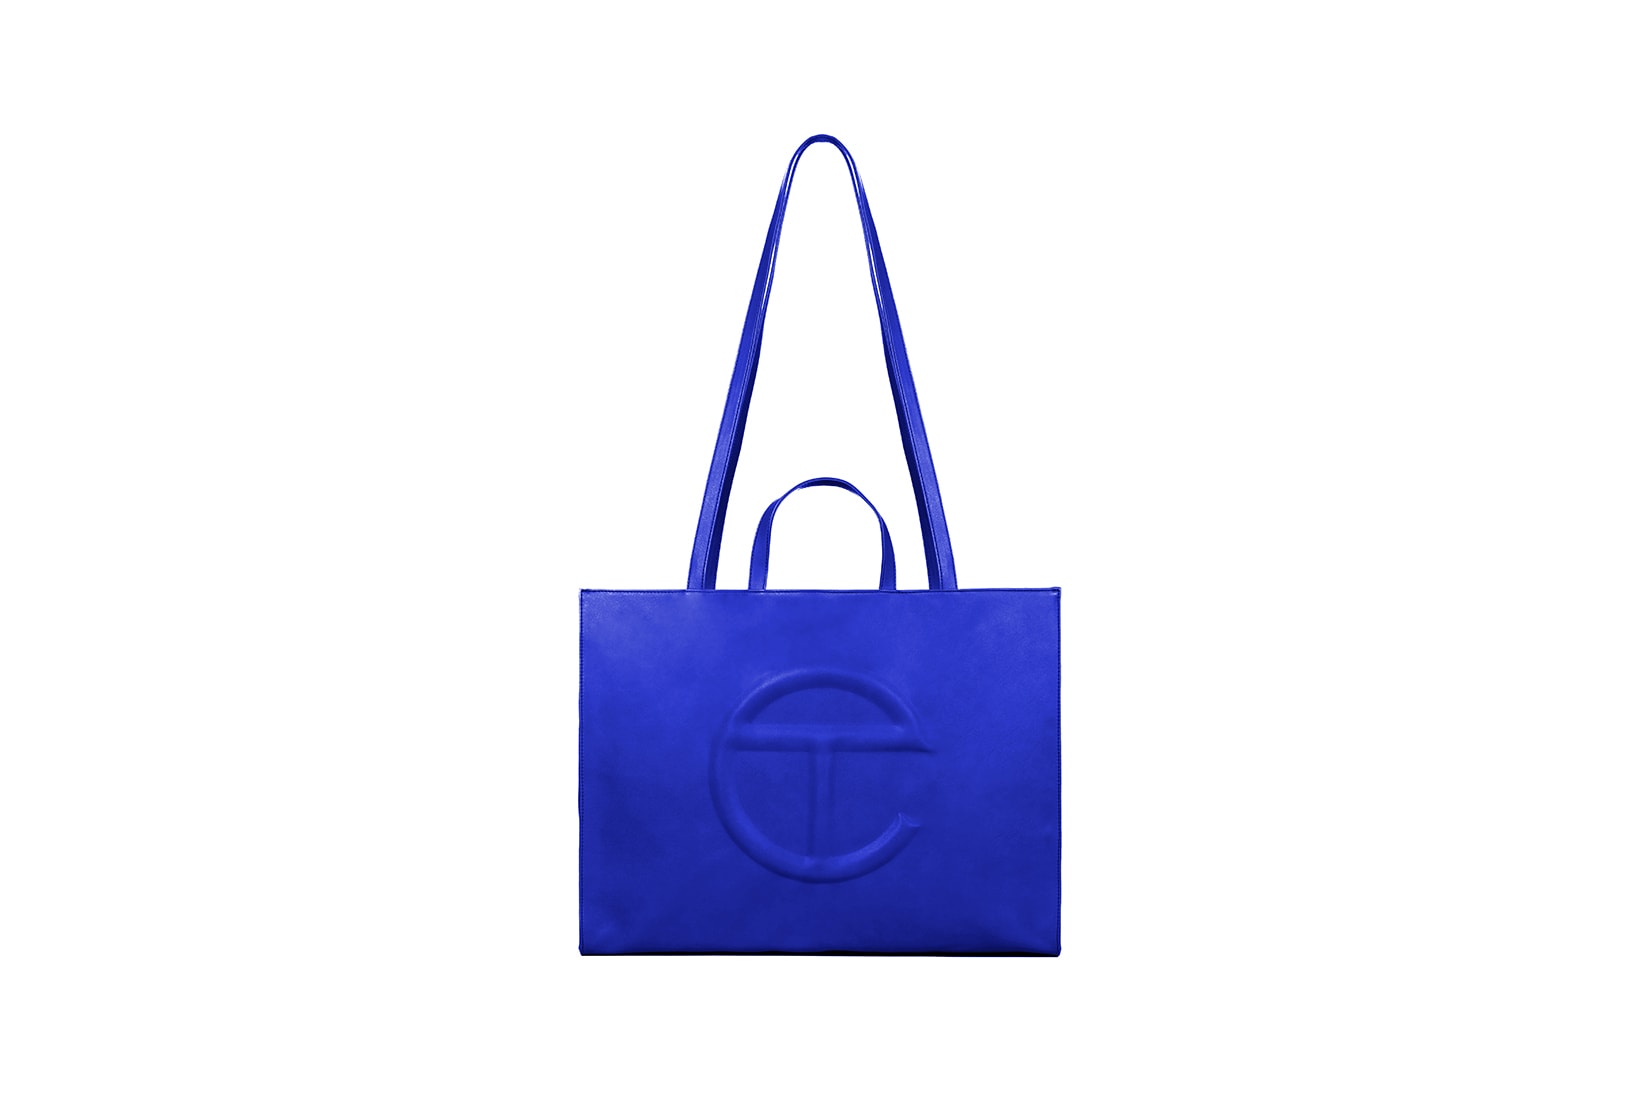 Telfar Shopping Bag Painter's Tape Royal Blue New Colorway Large